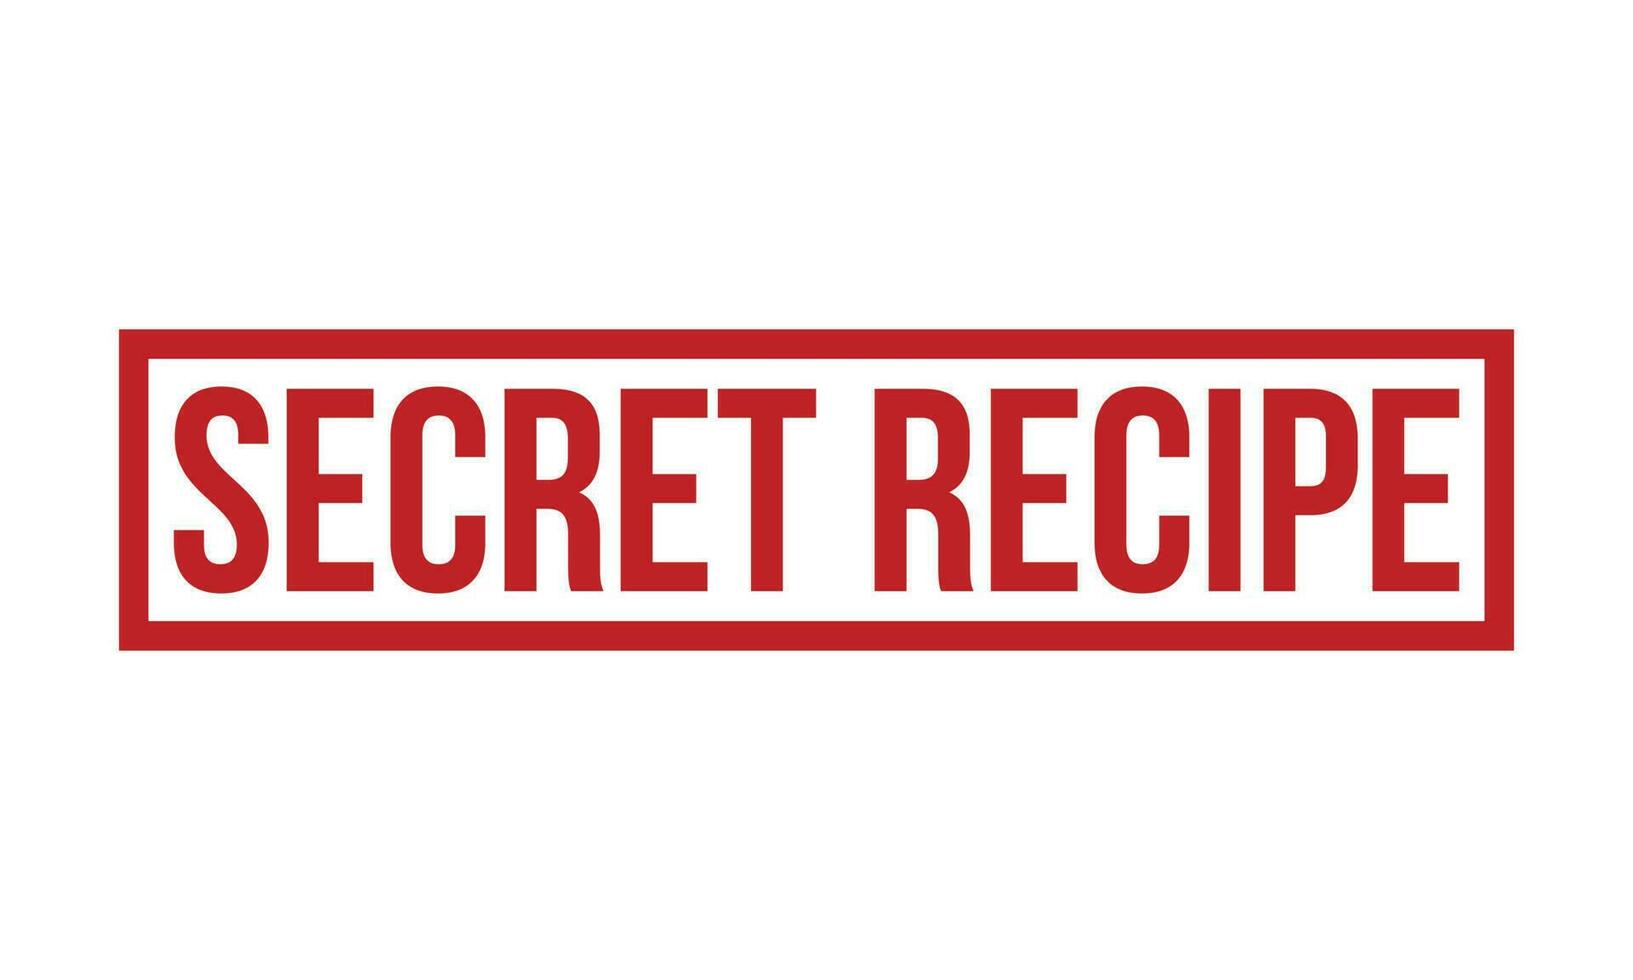 Secret Recipe Rubber Stamp Seal Vector